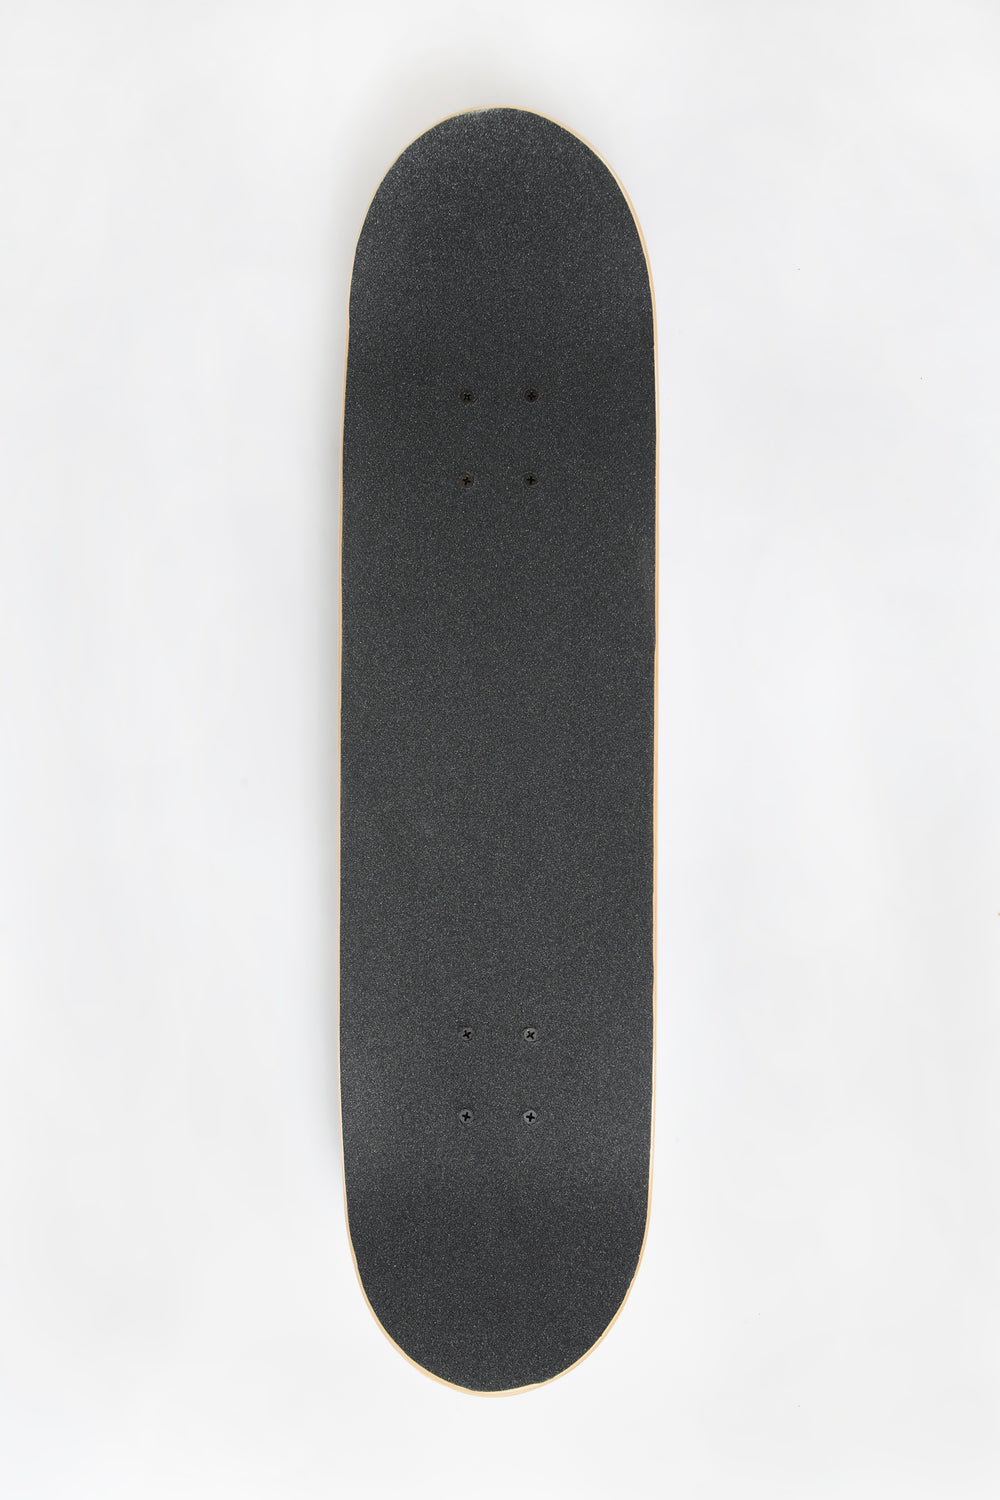 Skateboard Imprimé Libellule Death Valley 8